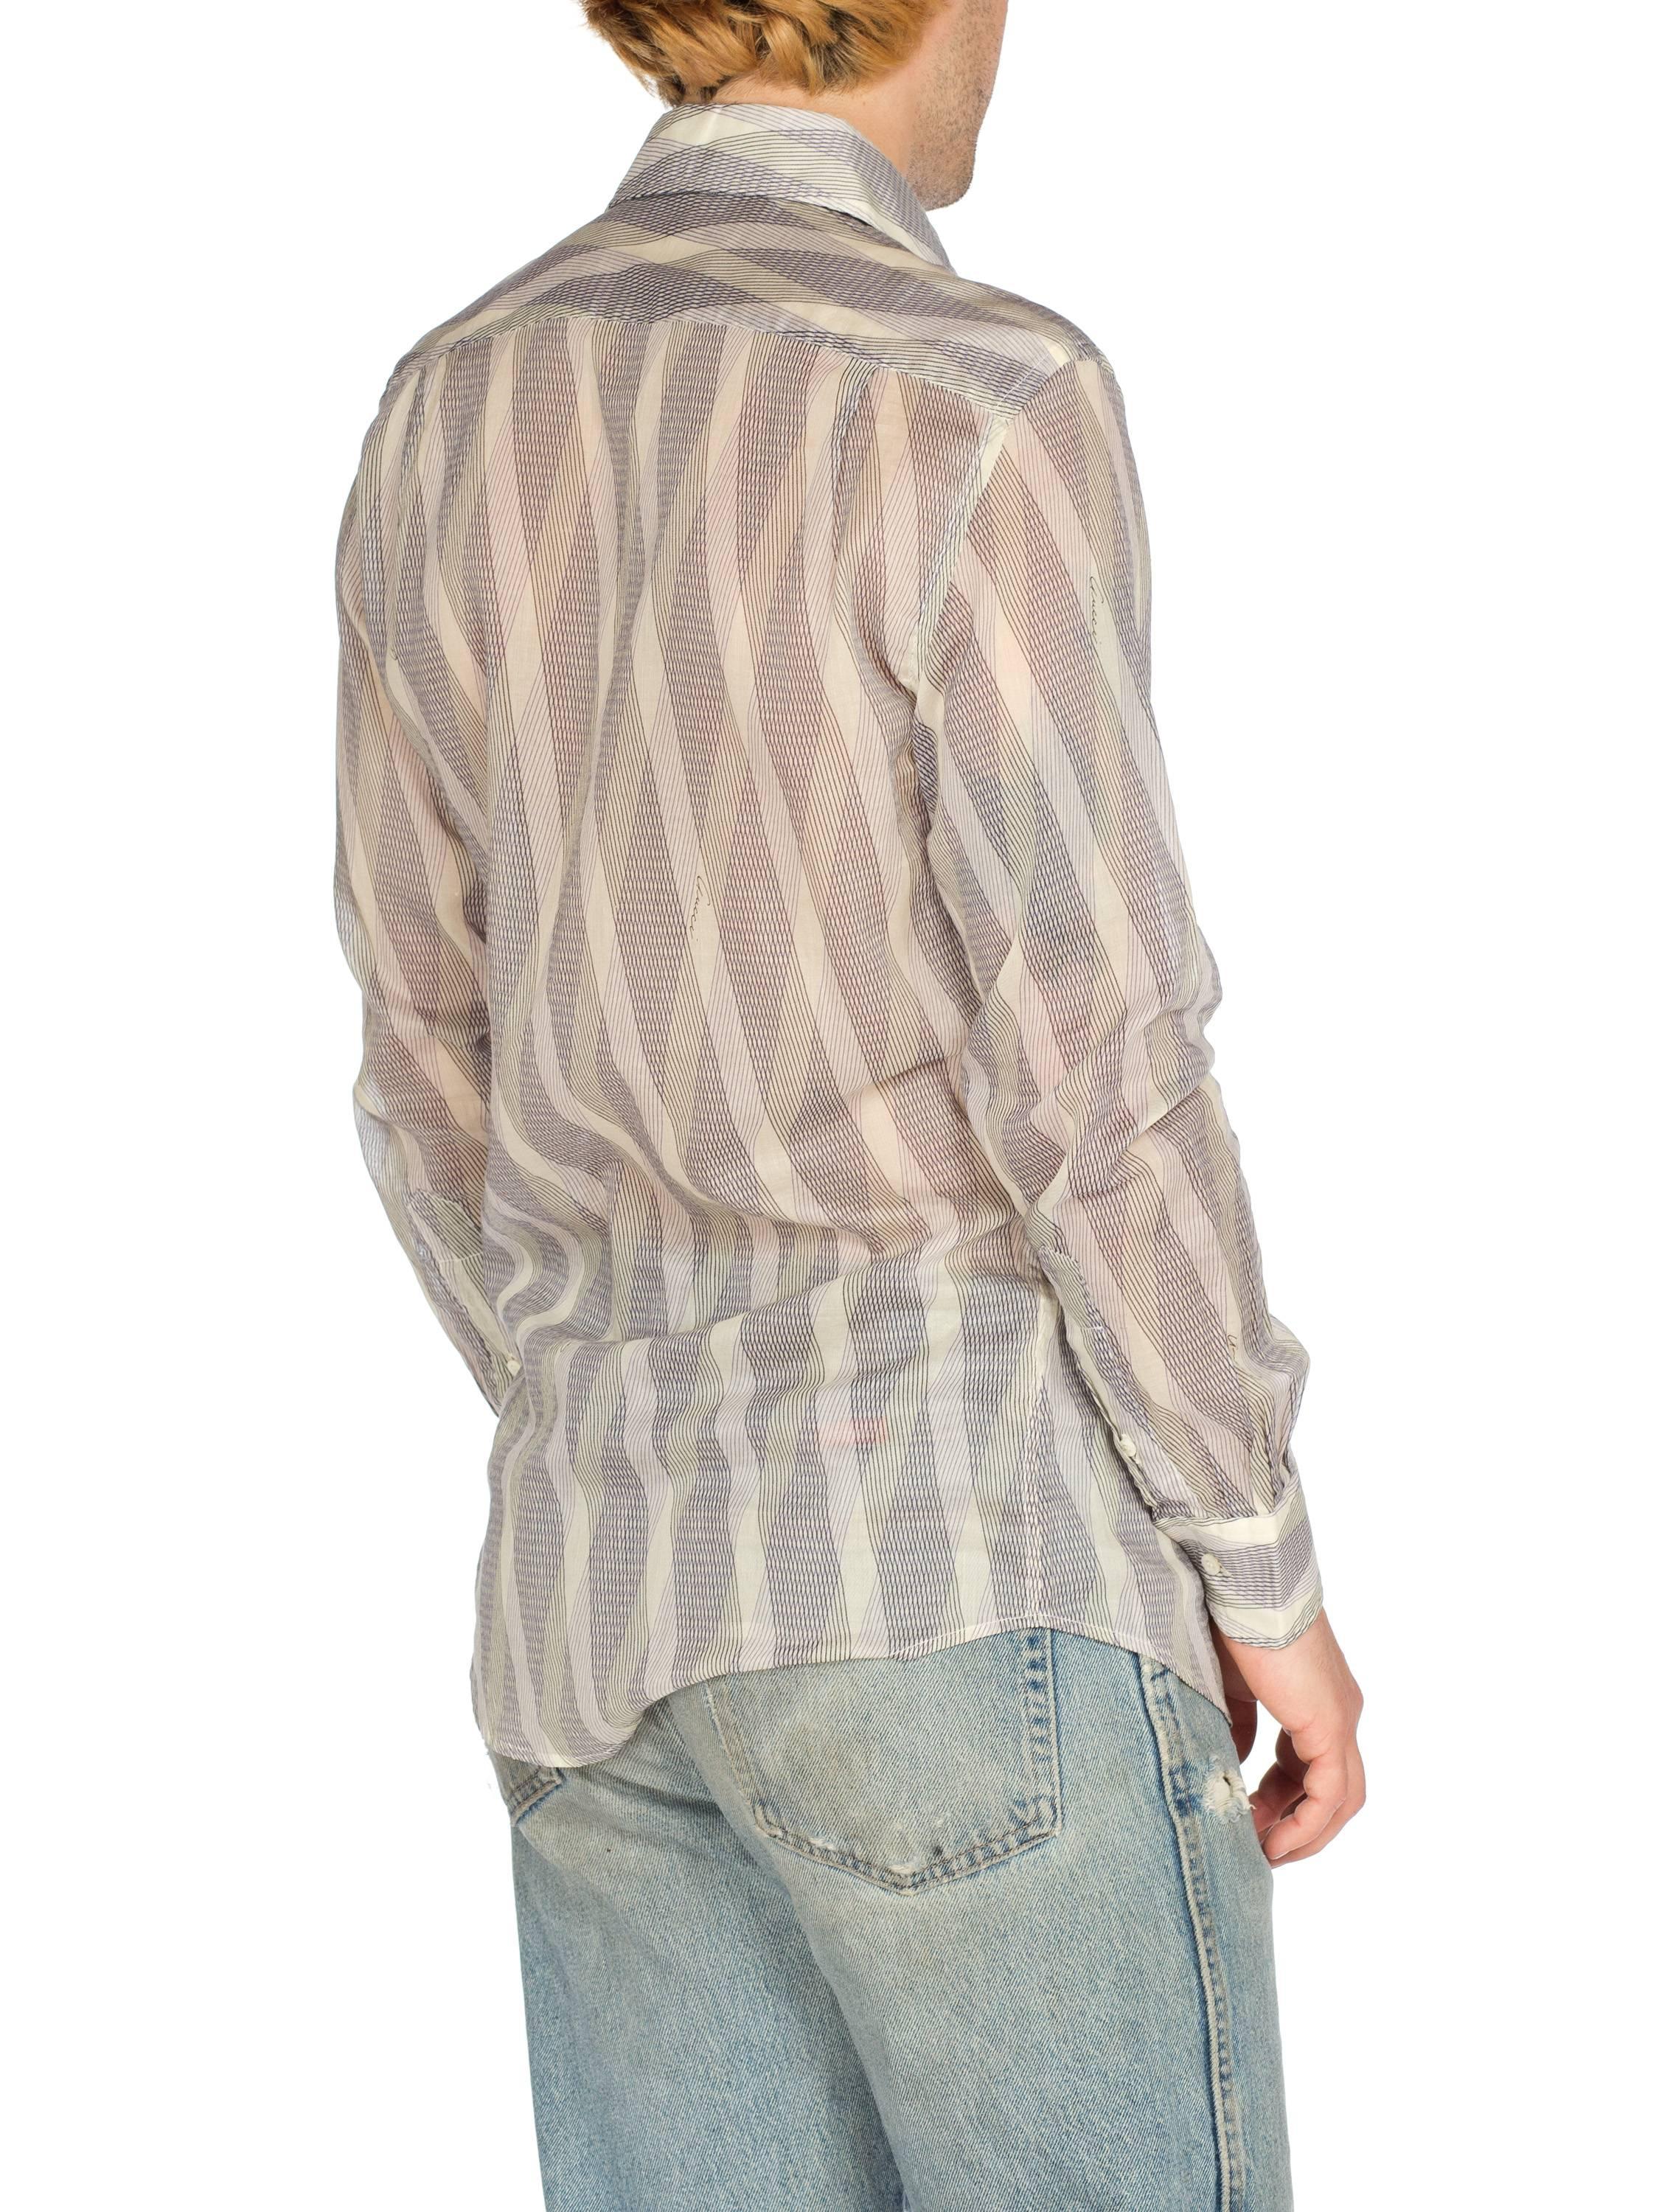 1990S GUCCI Men's 70S Style Sheer Diagonal Striped Shirt 1